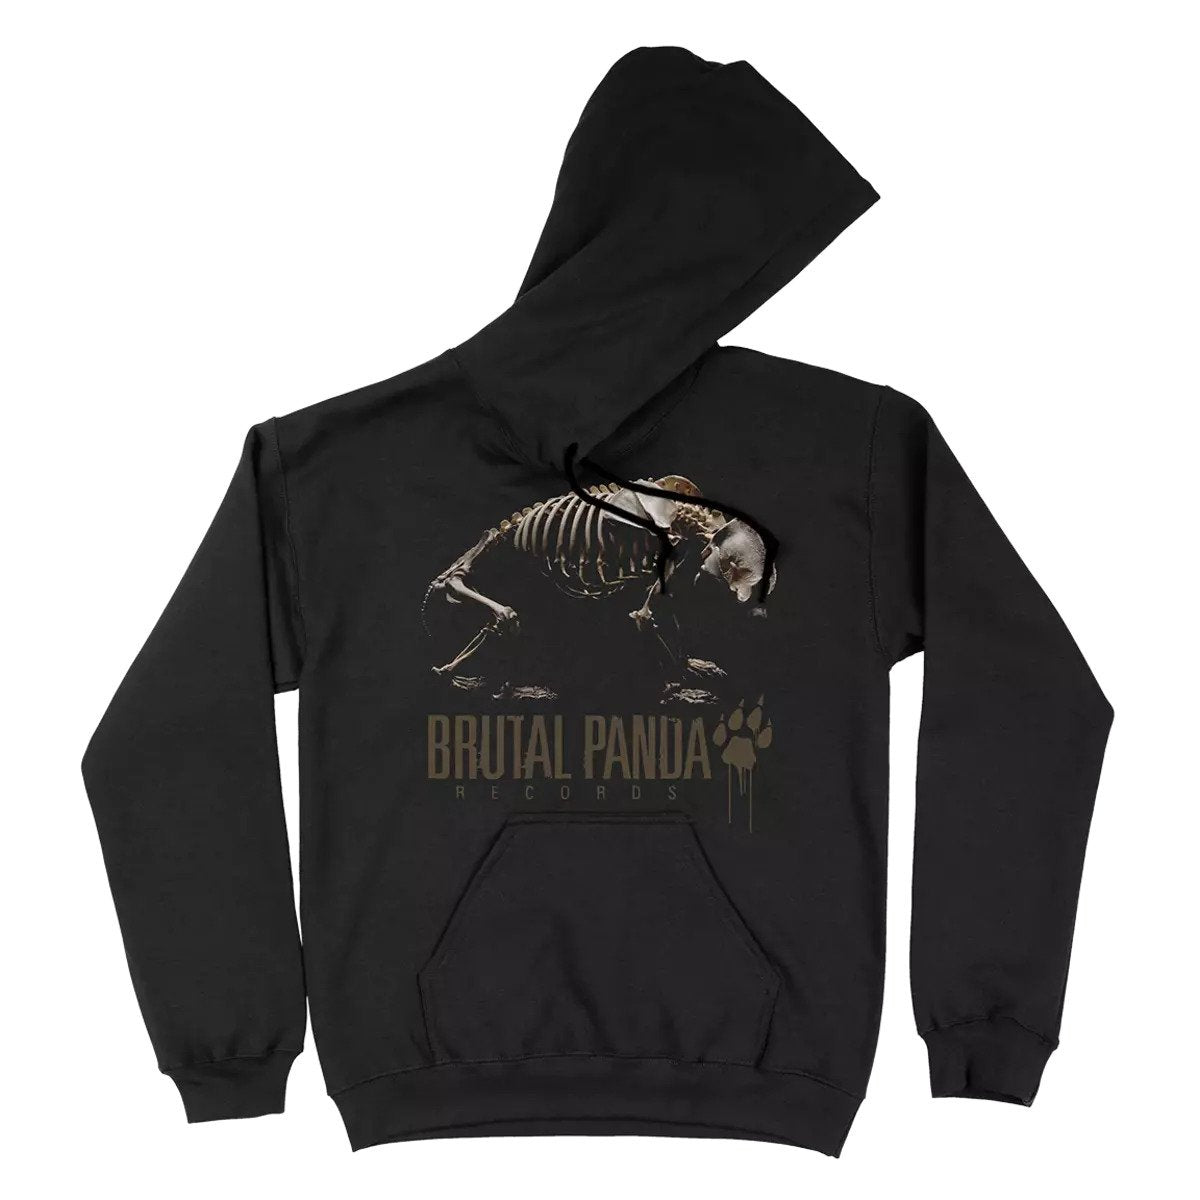 Brutal Panda Records - Panda Skeleton Hoodie (Designed by Jacob Bannon)